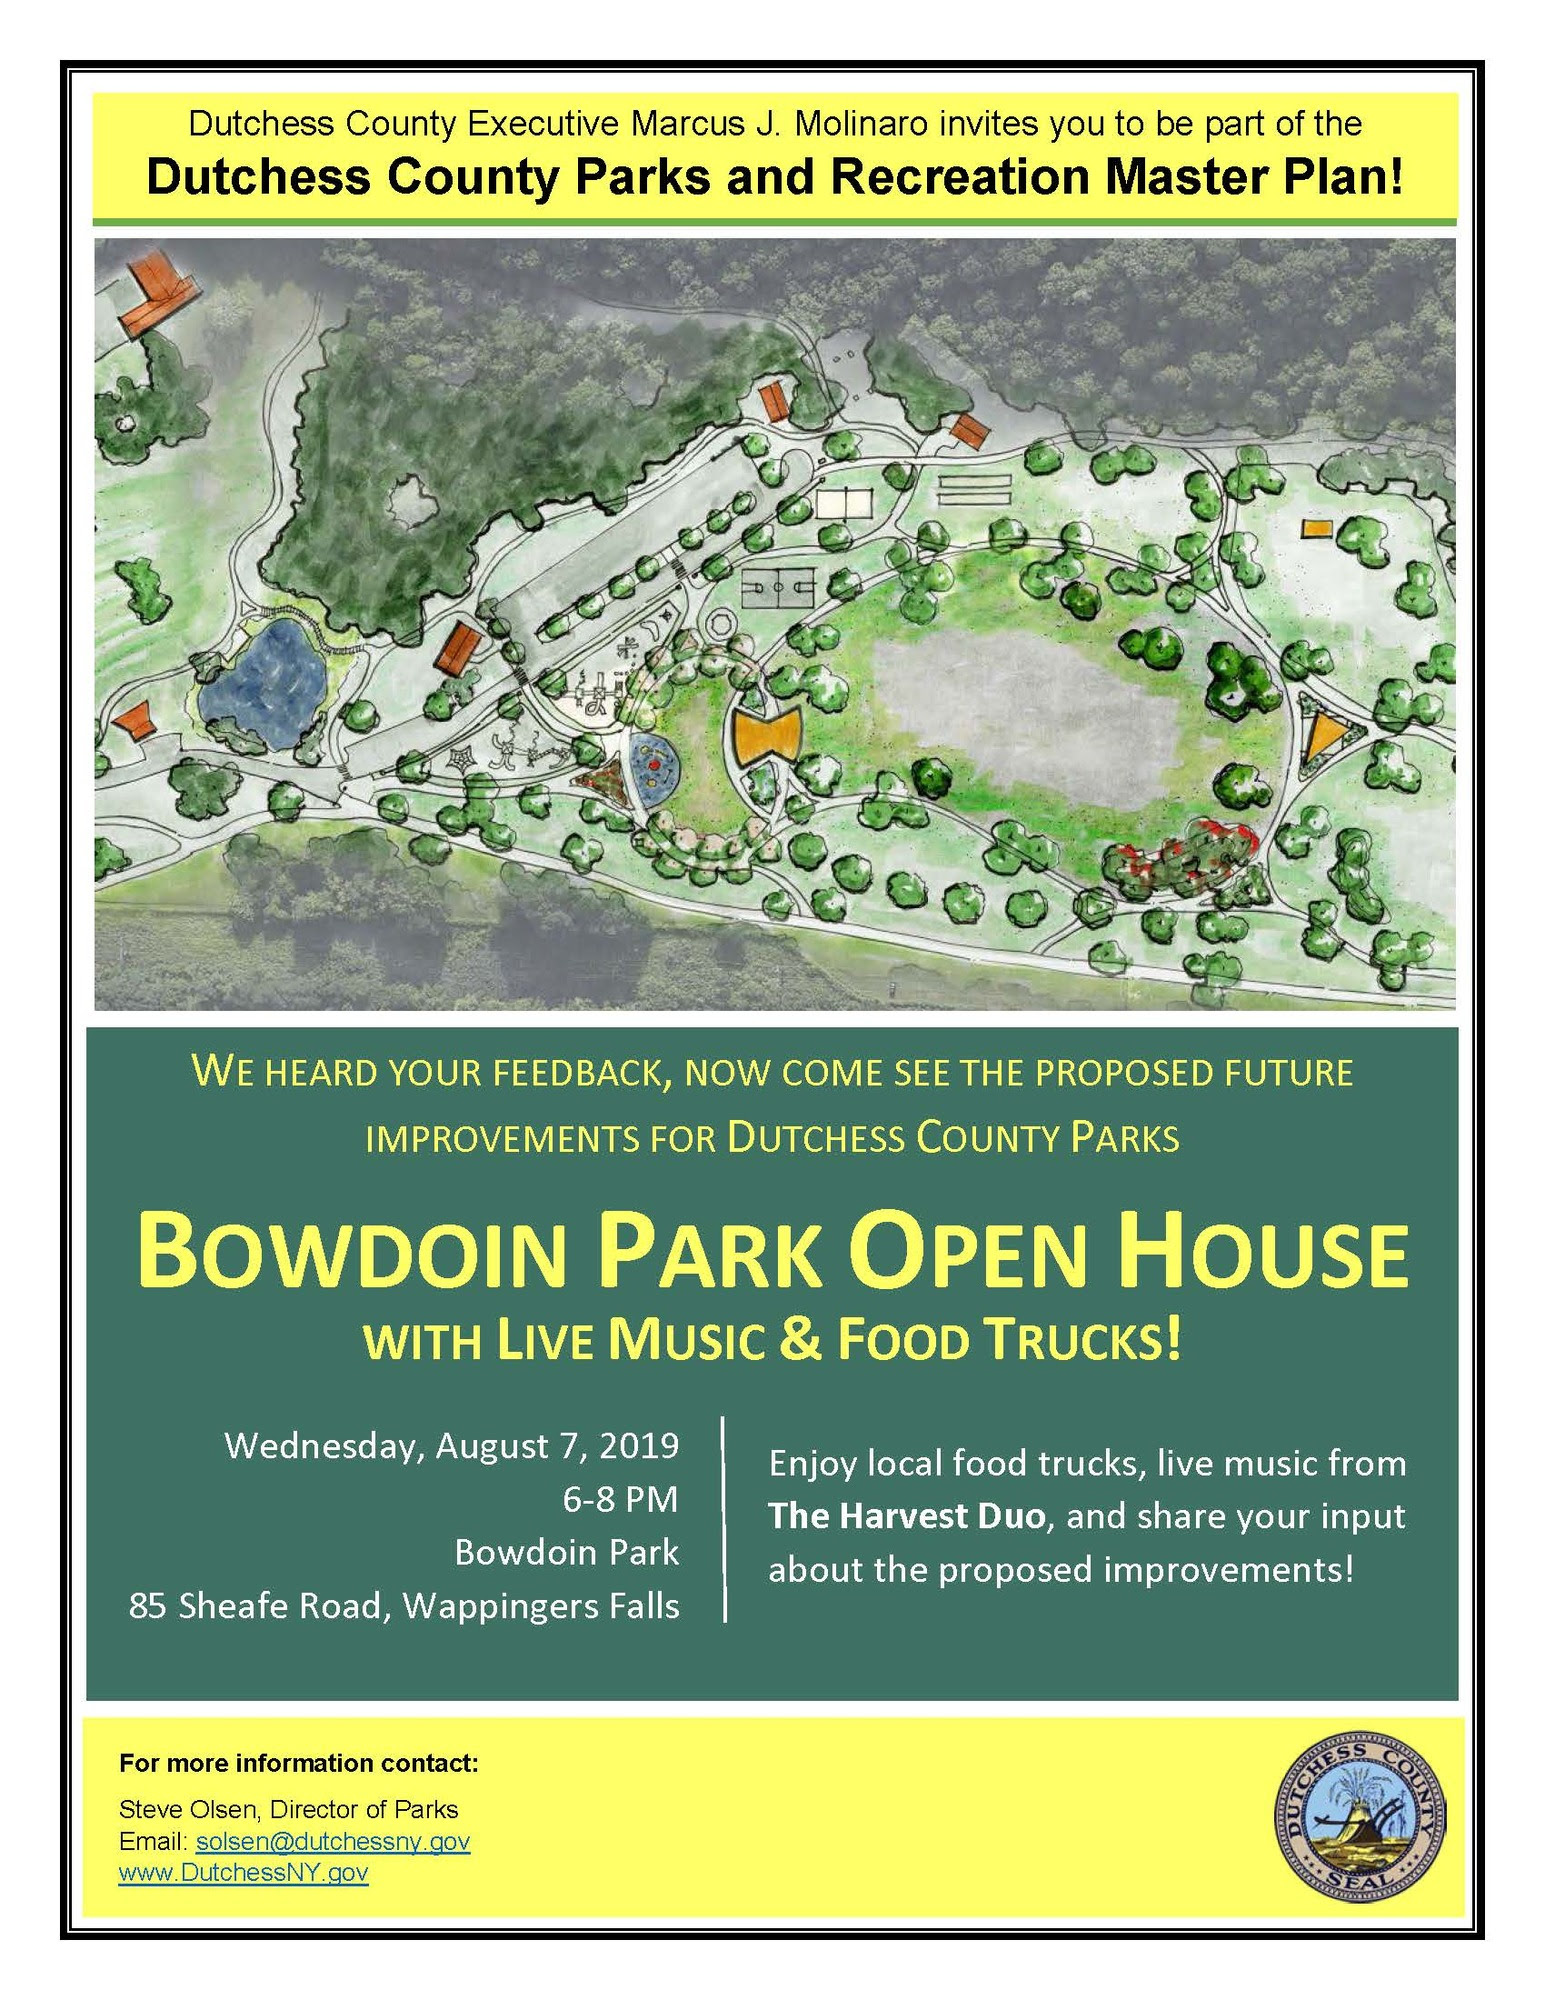 Bowdoin Park Outreach Event August 7th